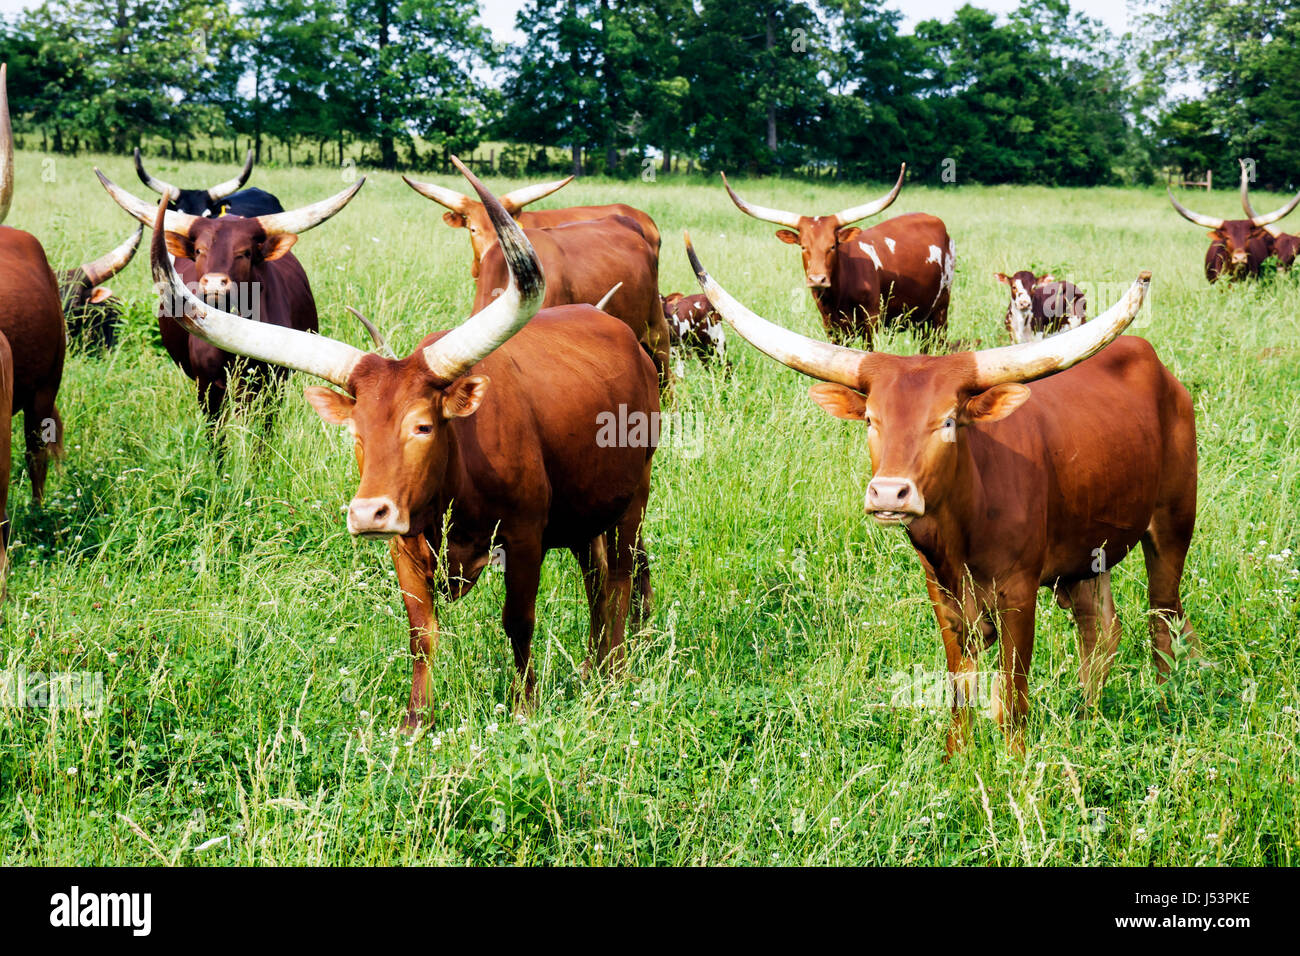 Arkansas Maynard,Ankole Watusi cattle,African breed,imported,animal,mammal,bovine,domestic cattle,large horns,low cholesterol beef,herd,pasture,graze, Stock Photo